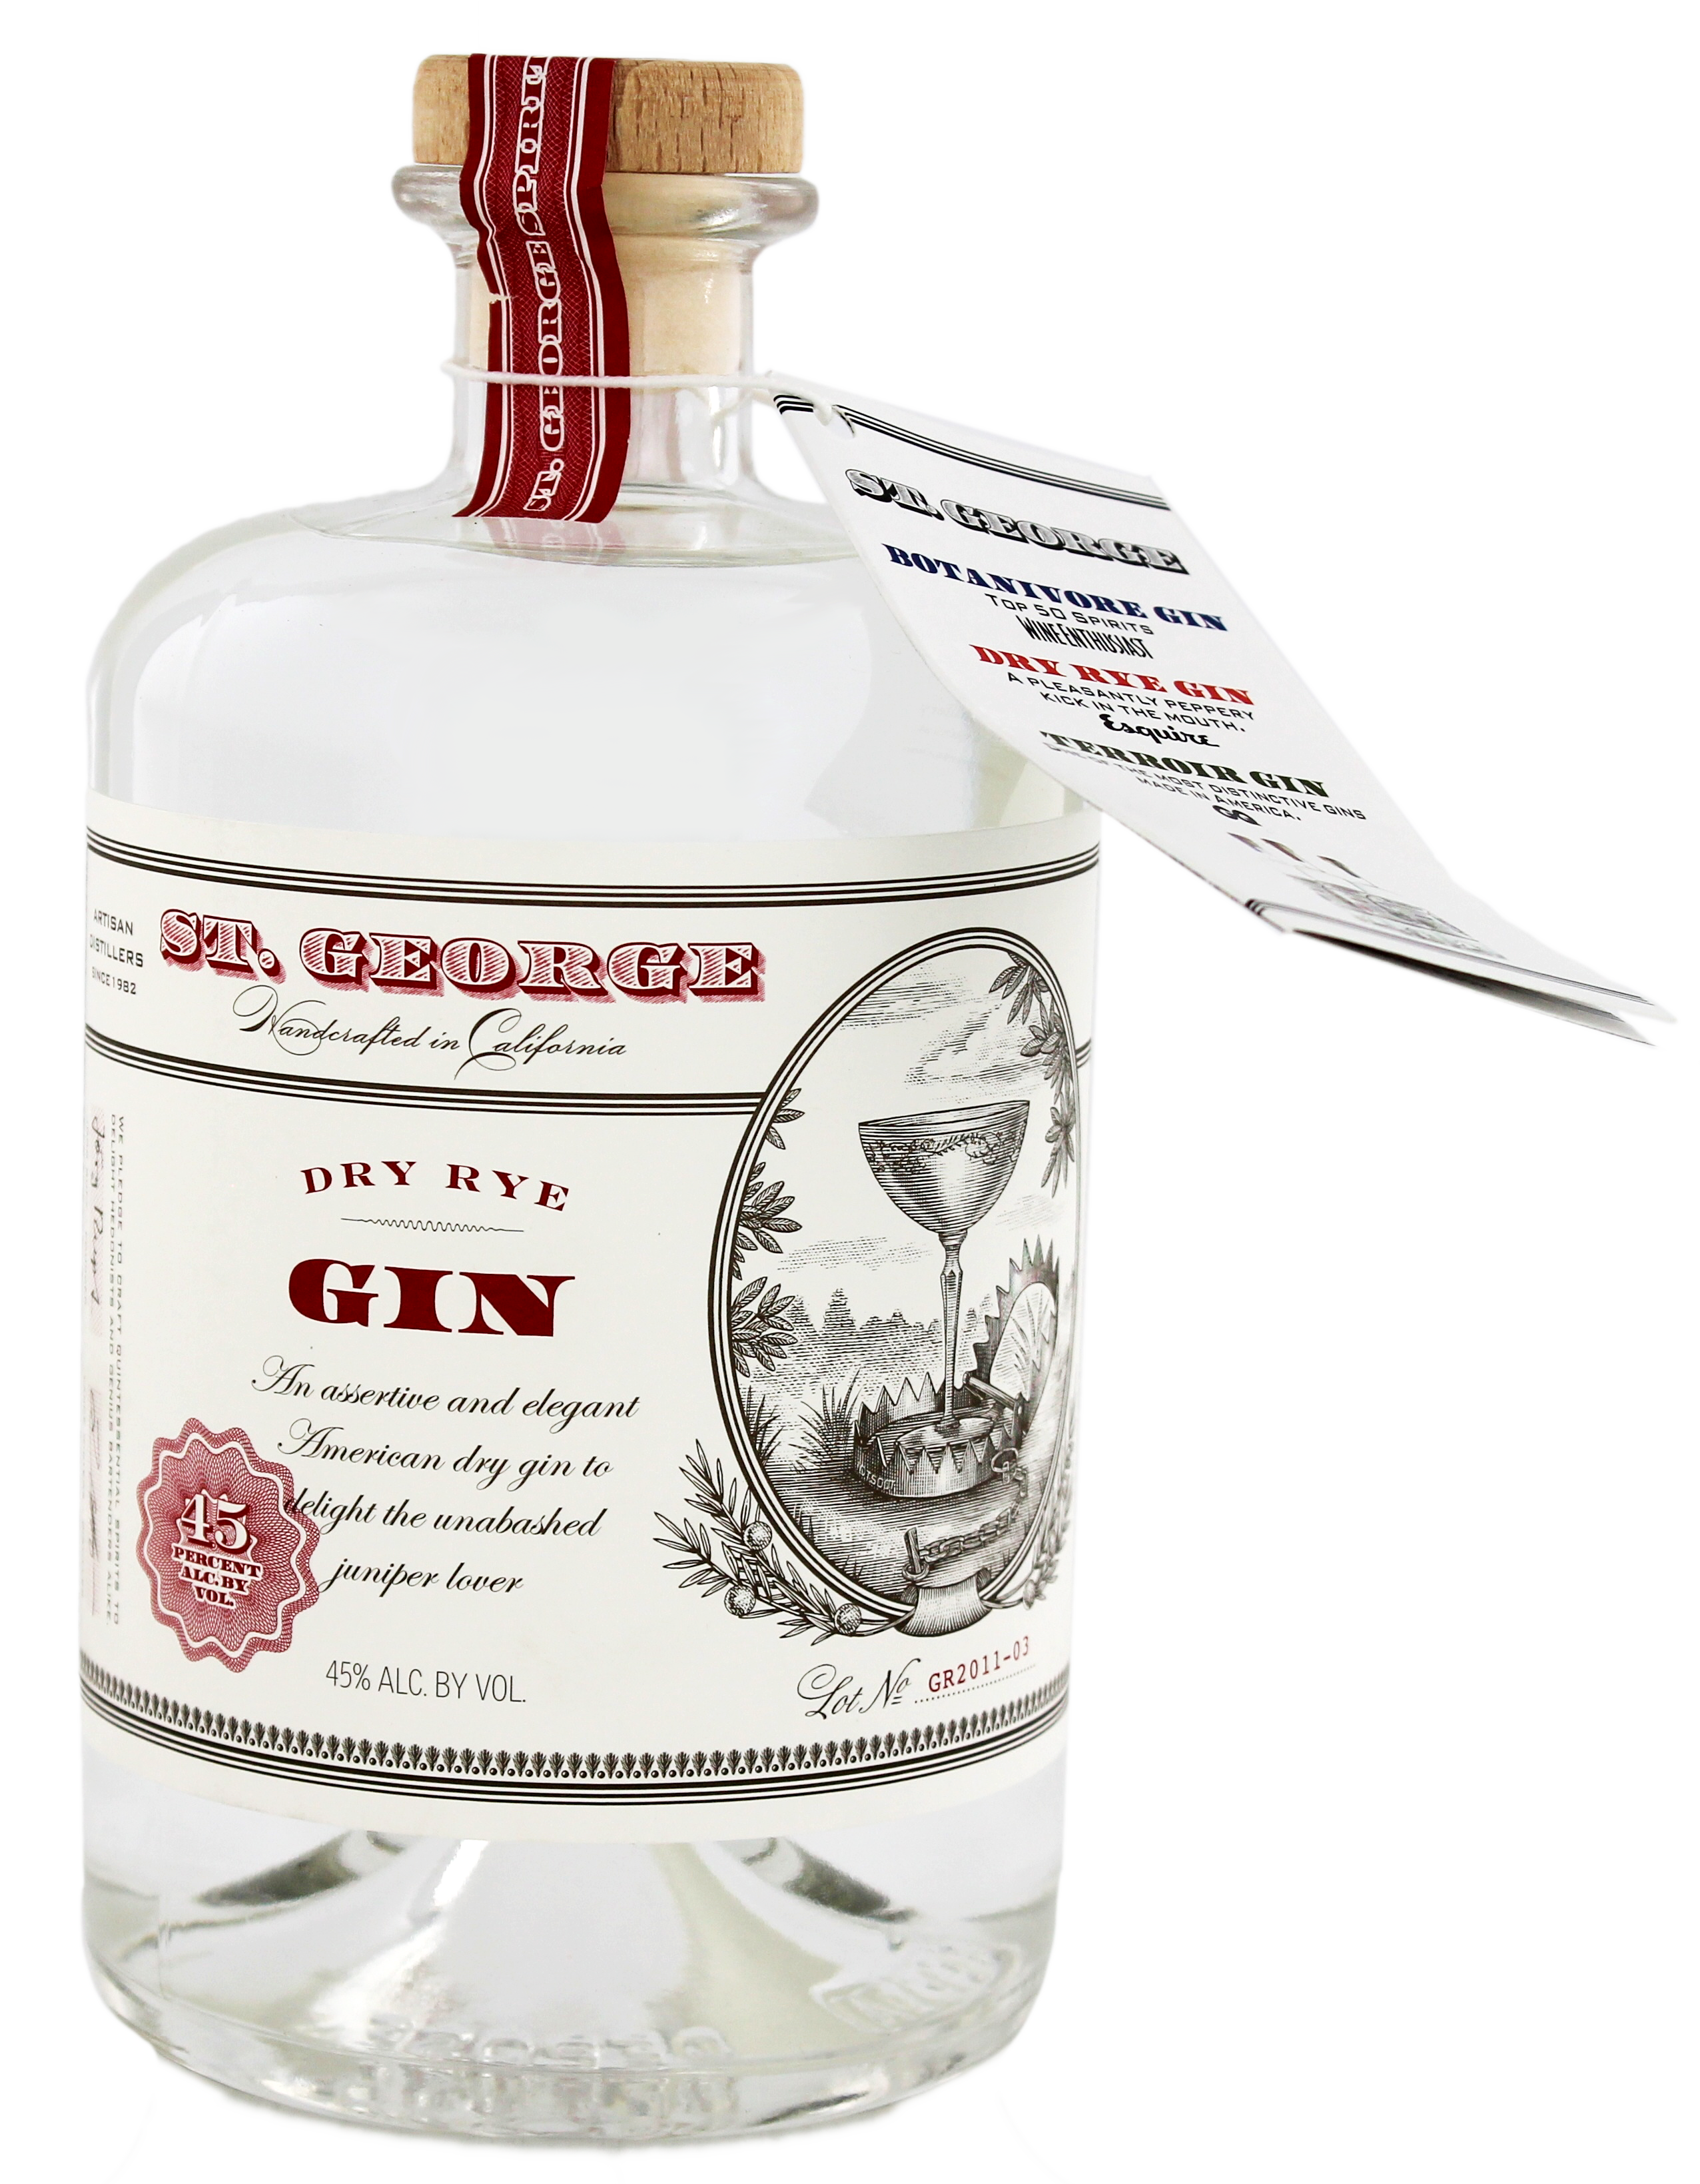 St. George Dry Rye Gin 45%vol. 0,7l